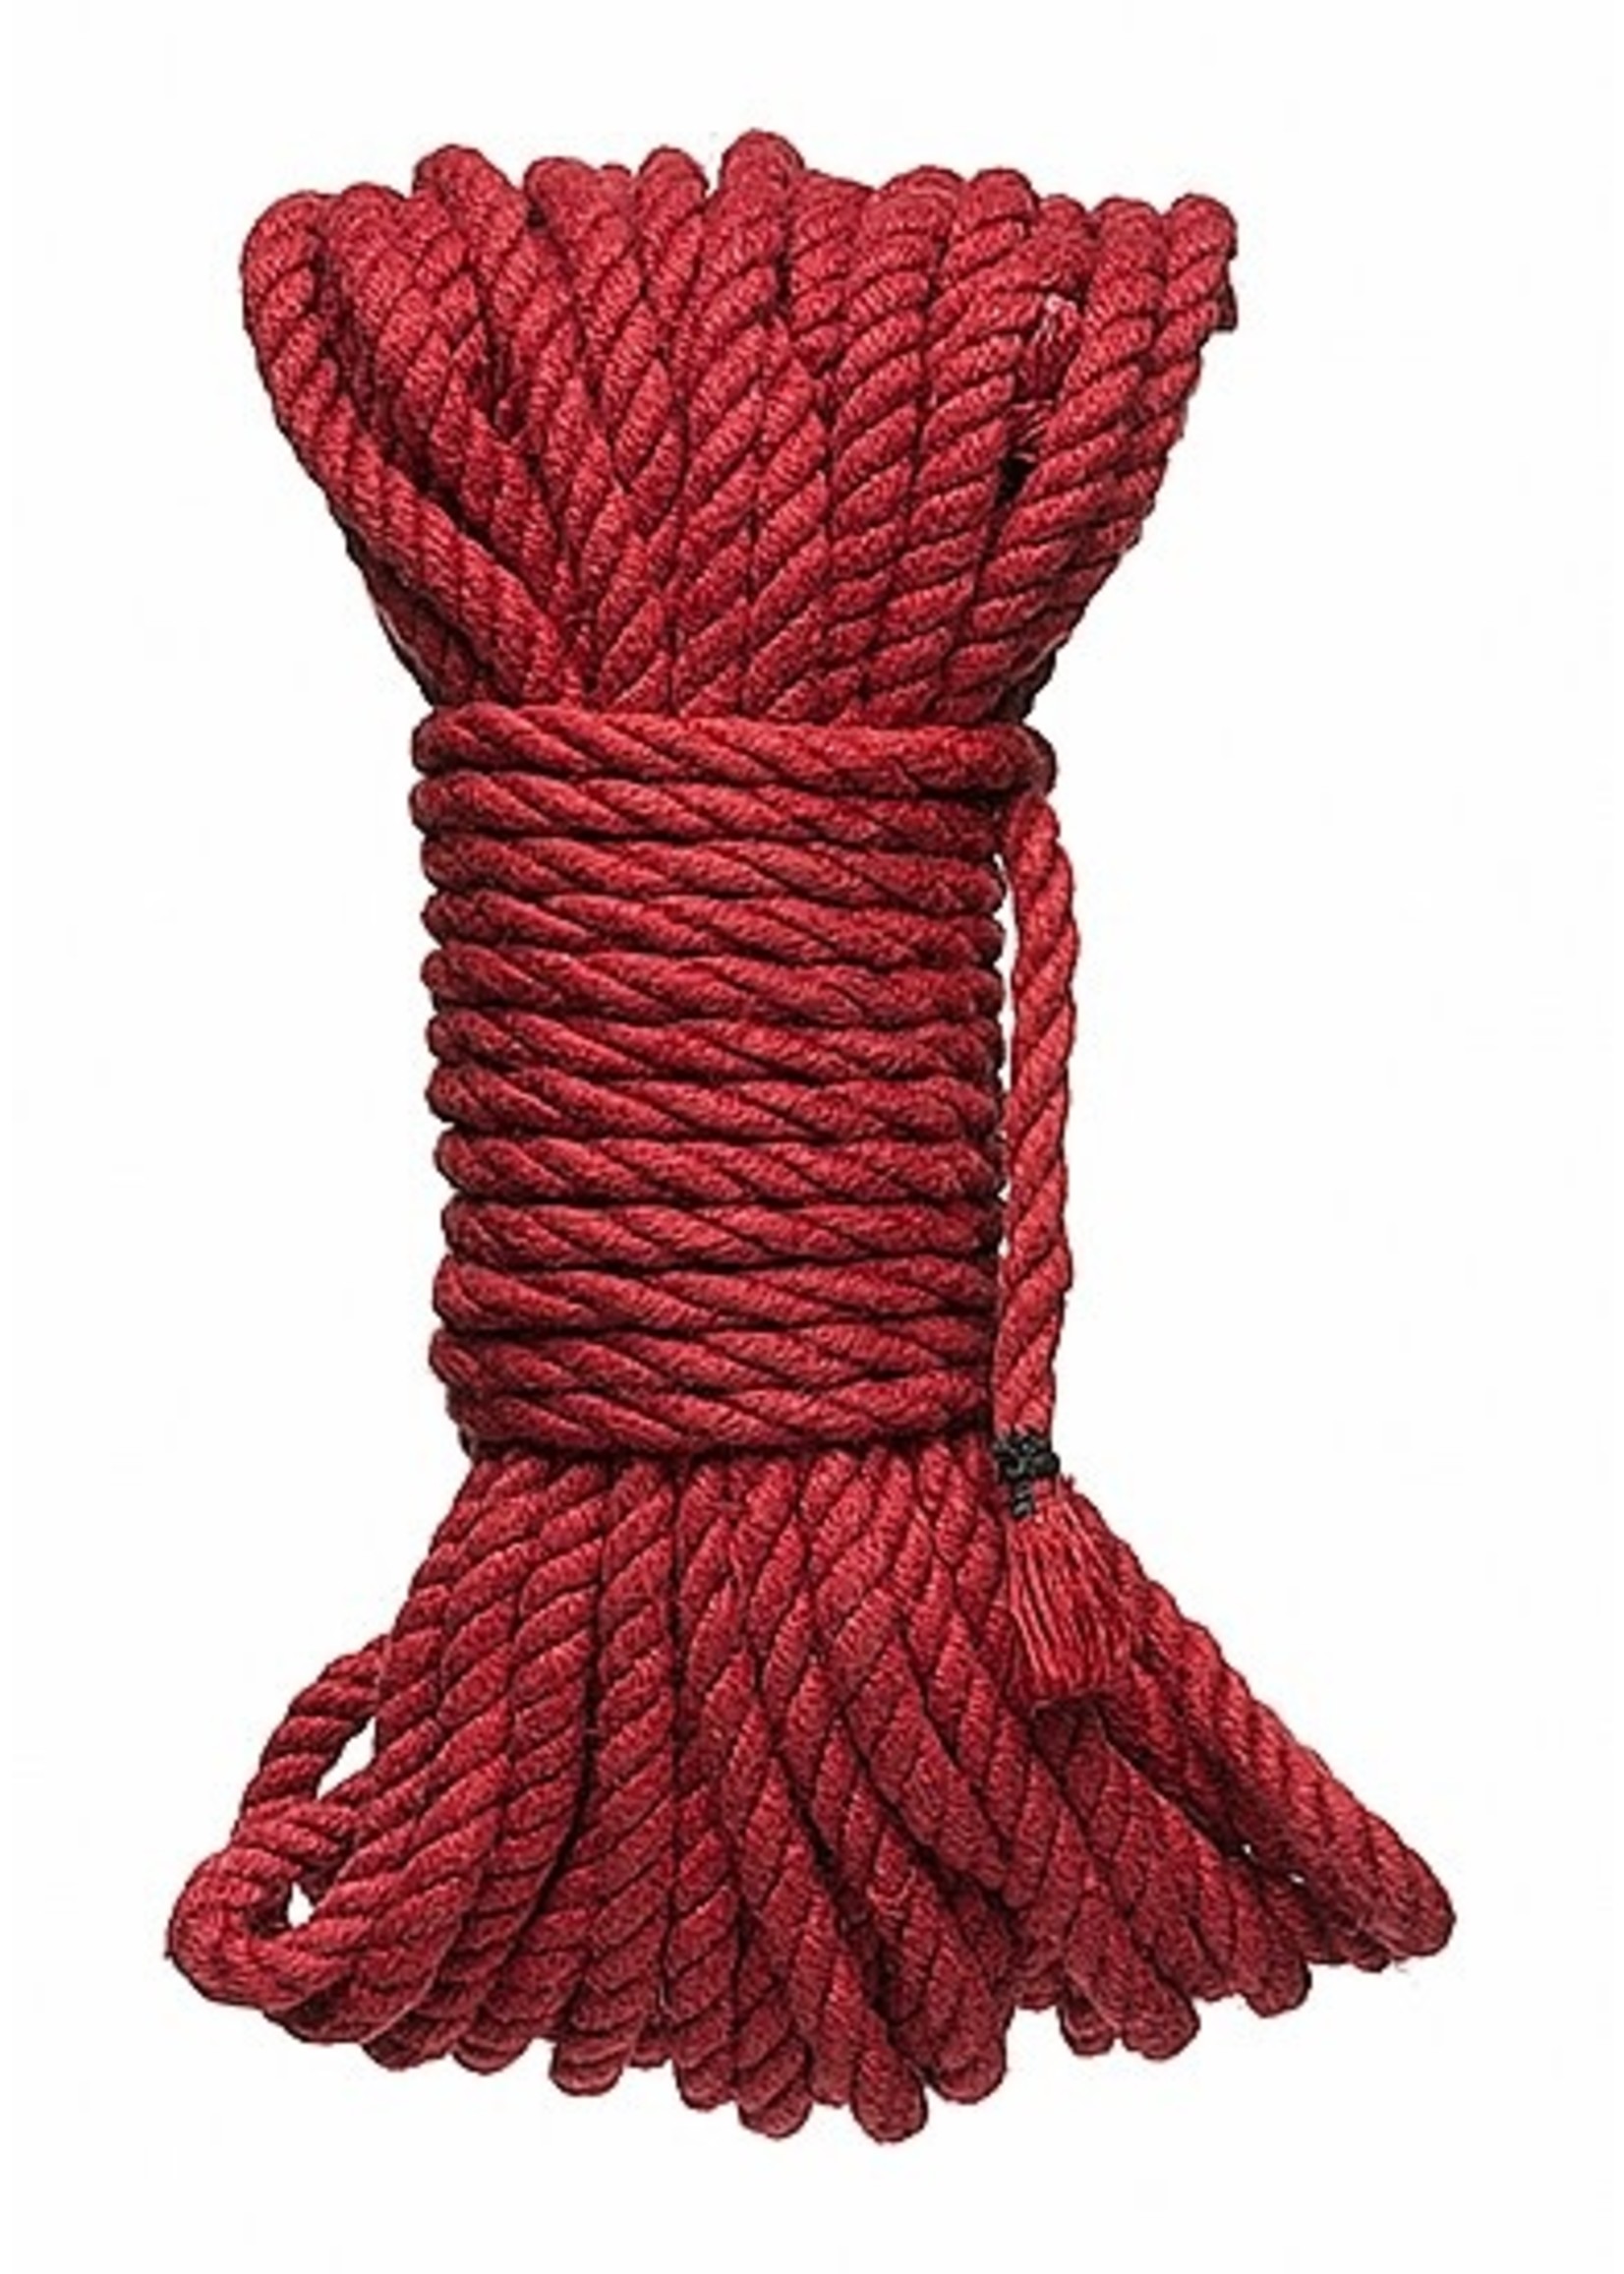 Doc Johnson 6 mm hennep/hemp bondage rope - 50 ft. - red